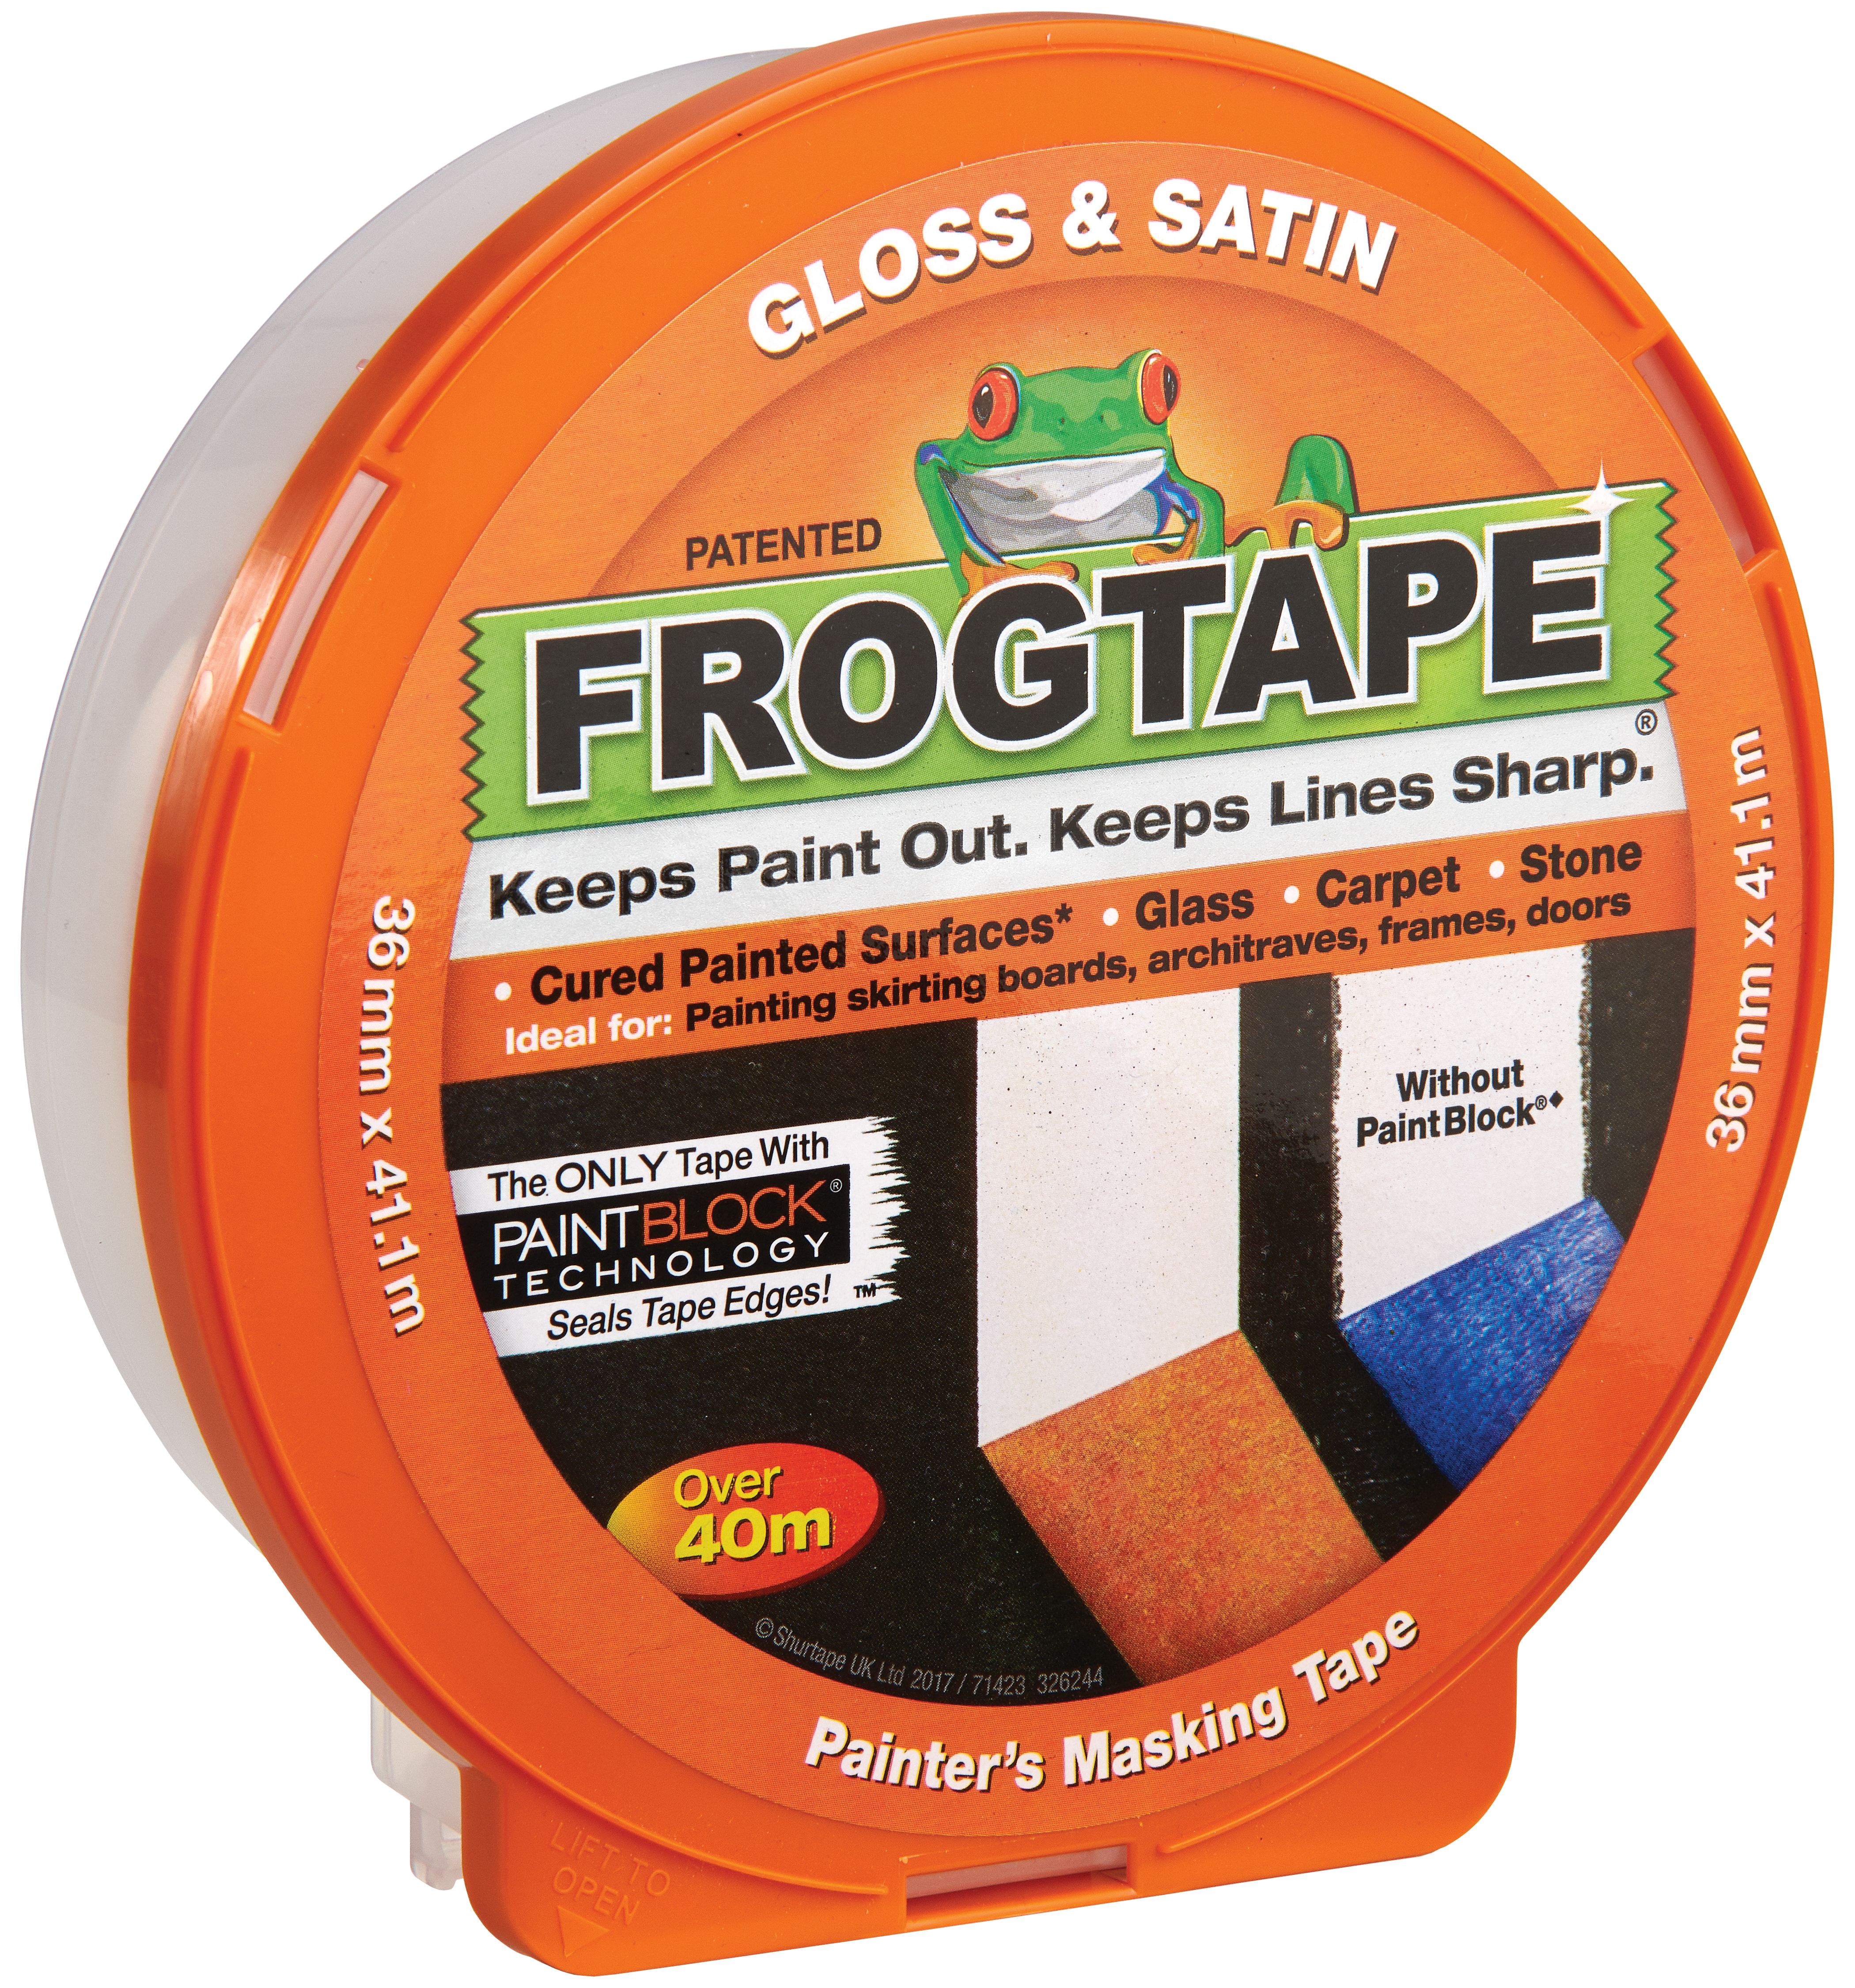 Image of FrogTape Painter's Gloss & Satin Orange Masking Tape - 36mm x 41m